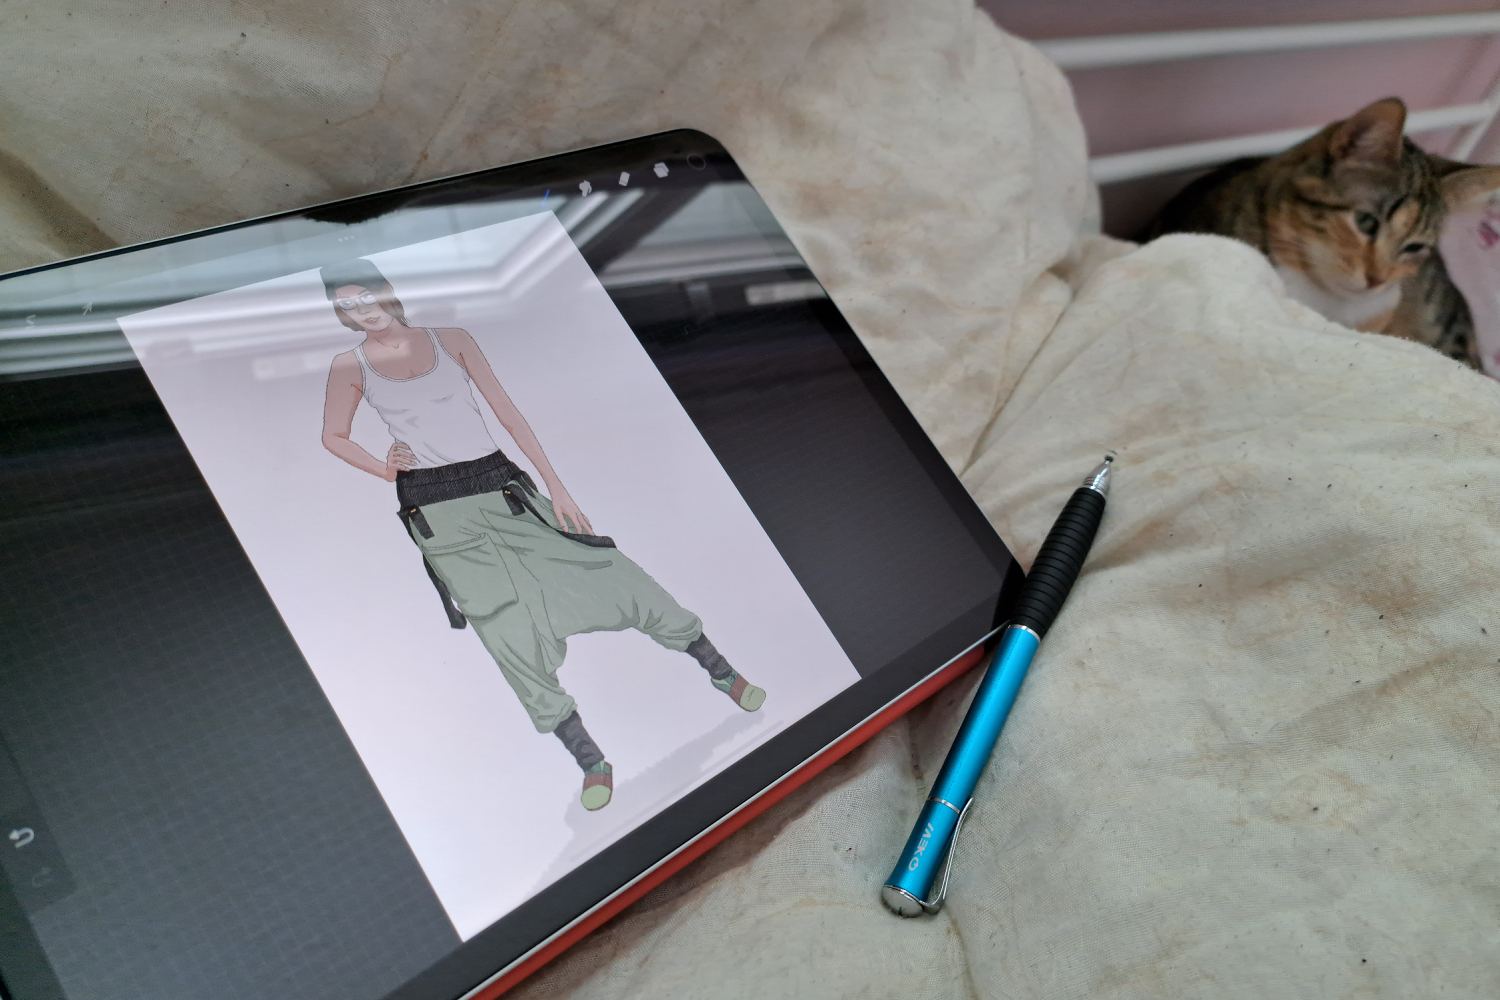 Draw a character on iPad using Procreate.